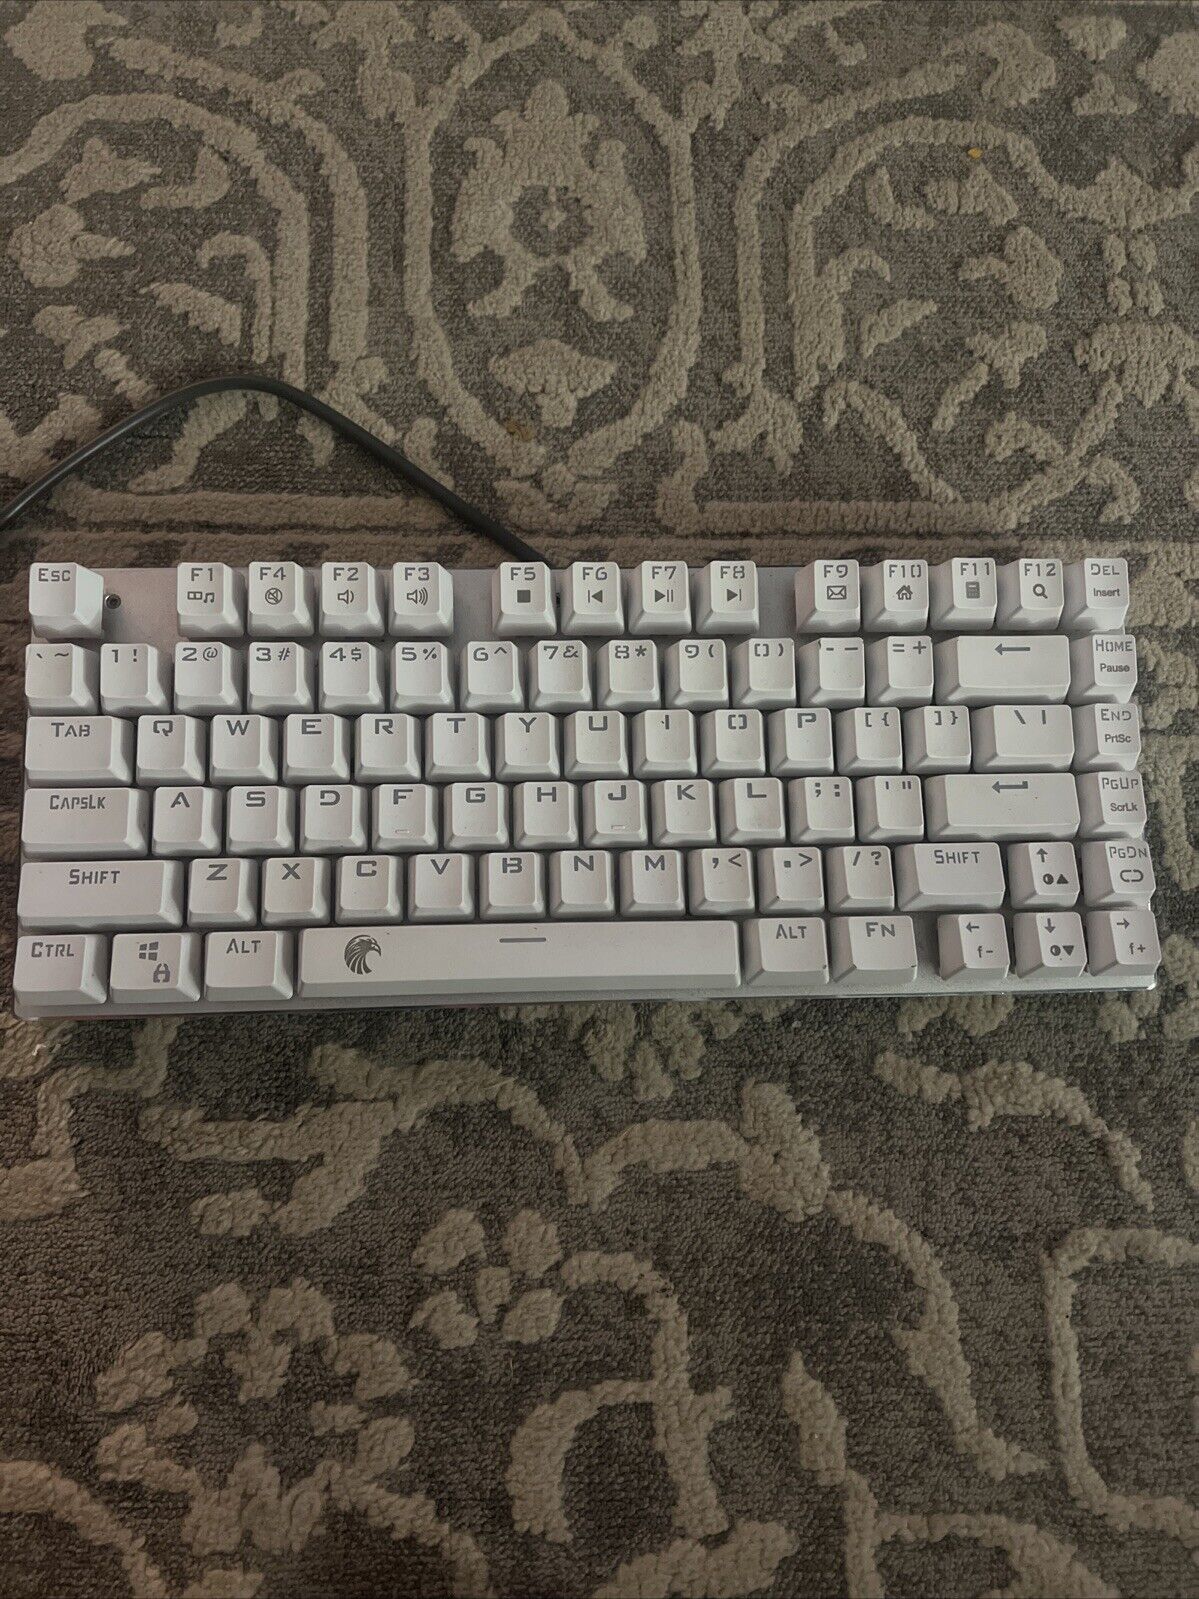 E-Yooso Super Scholar/Z-88 White 81 Keys RGB Mechanical Gaming Keyboard